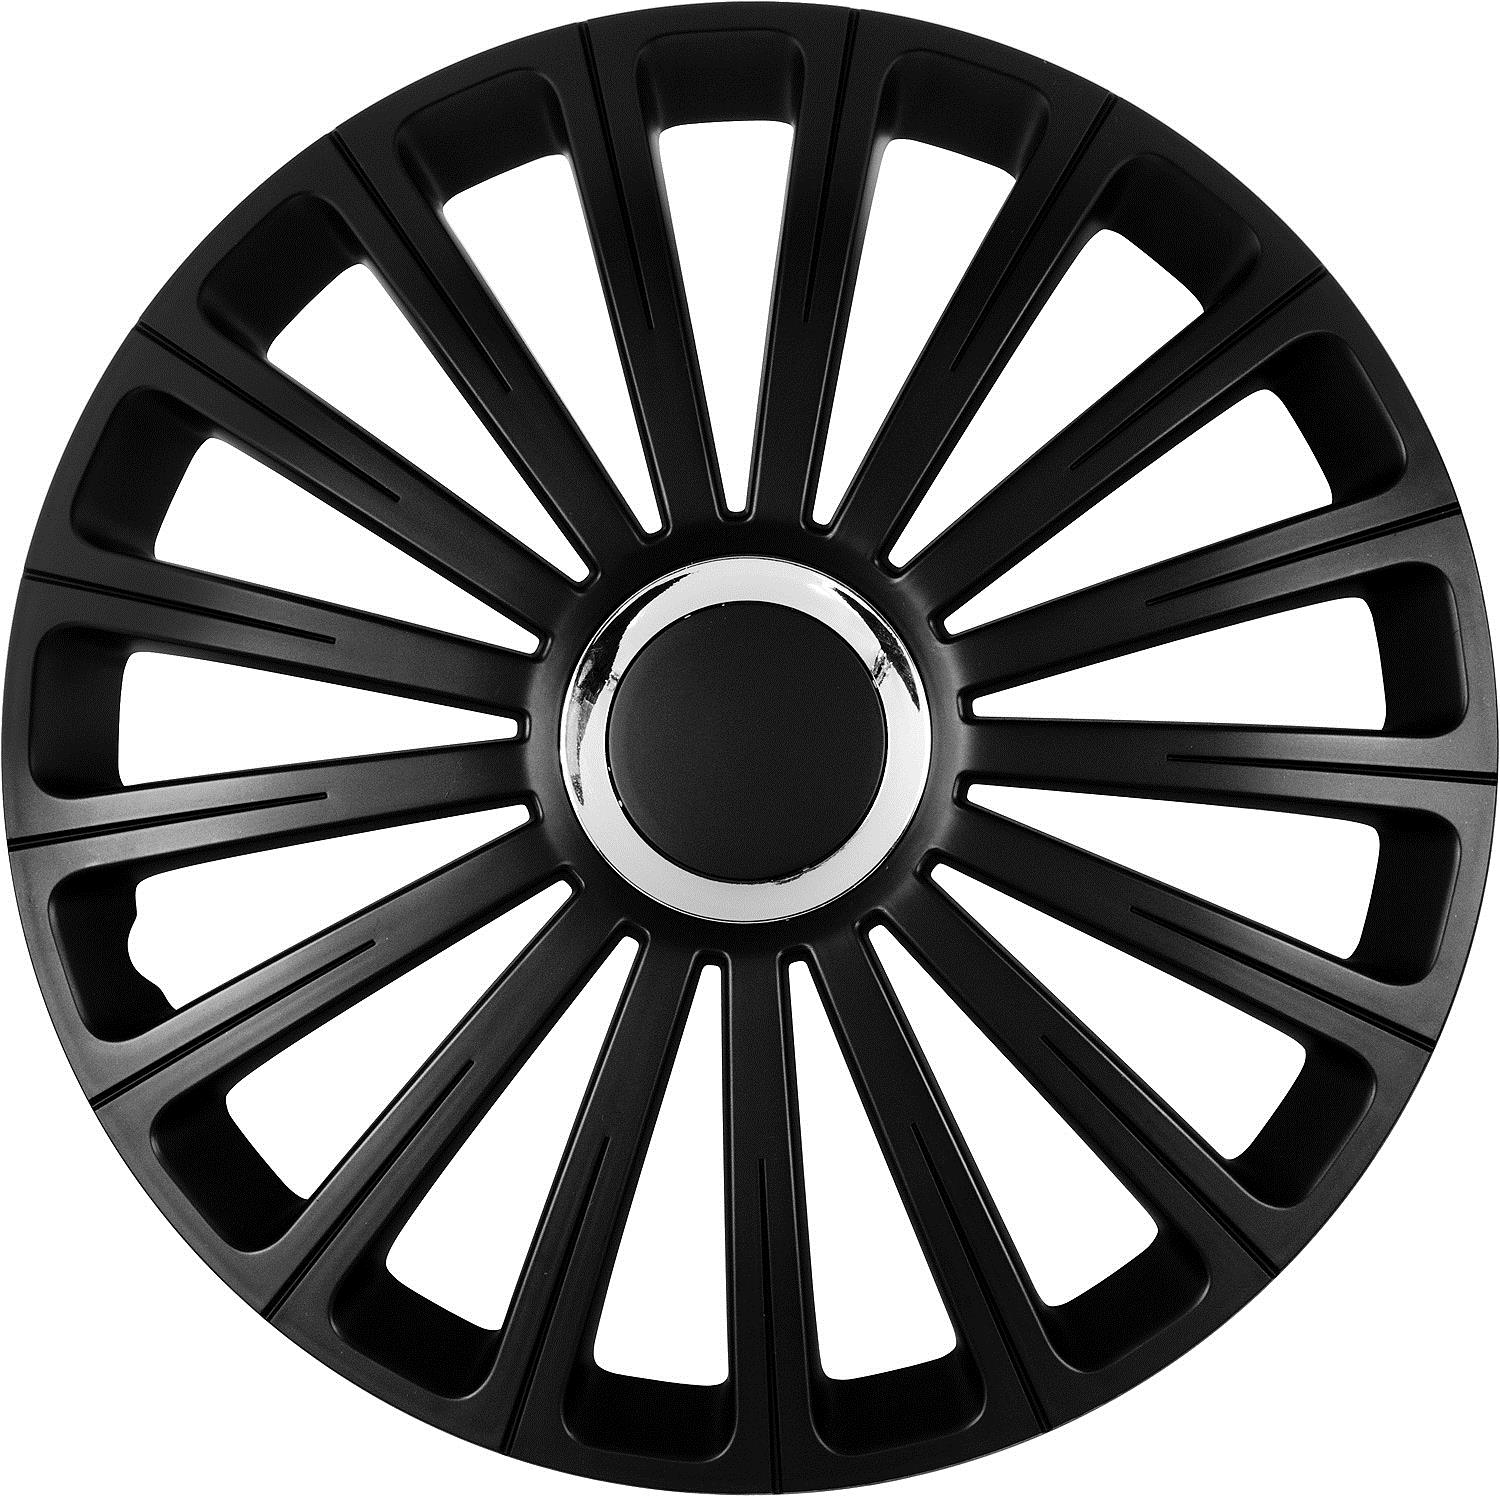 Wheel Covers - Radical Pro Black 15"